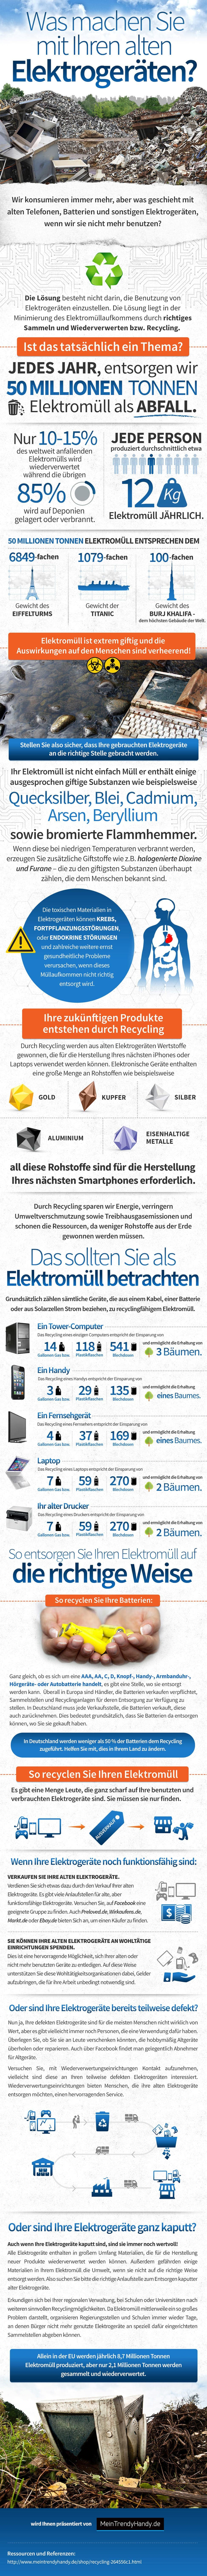 Recycling von Elektrogeräten